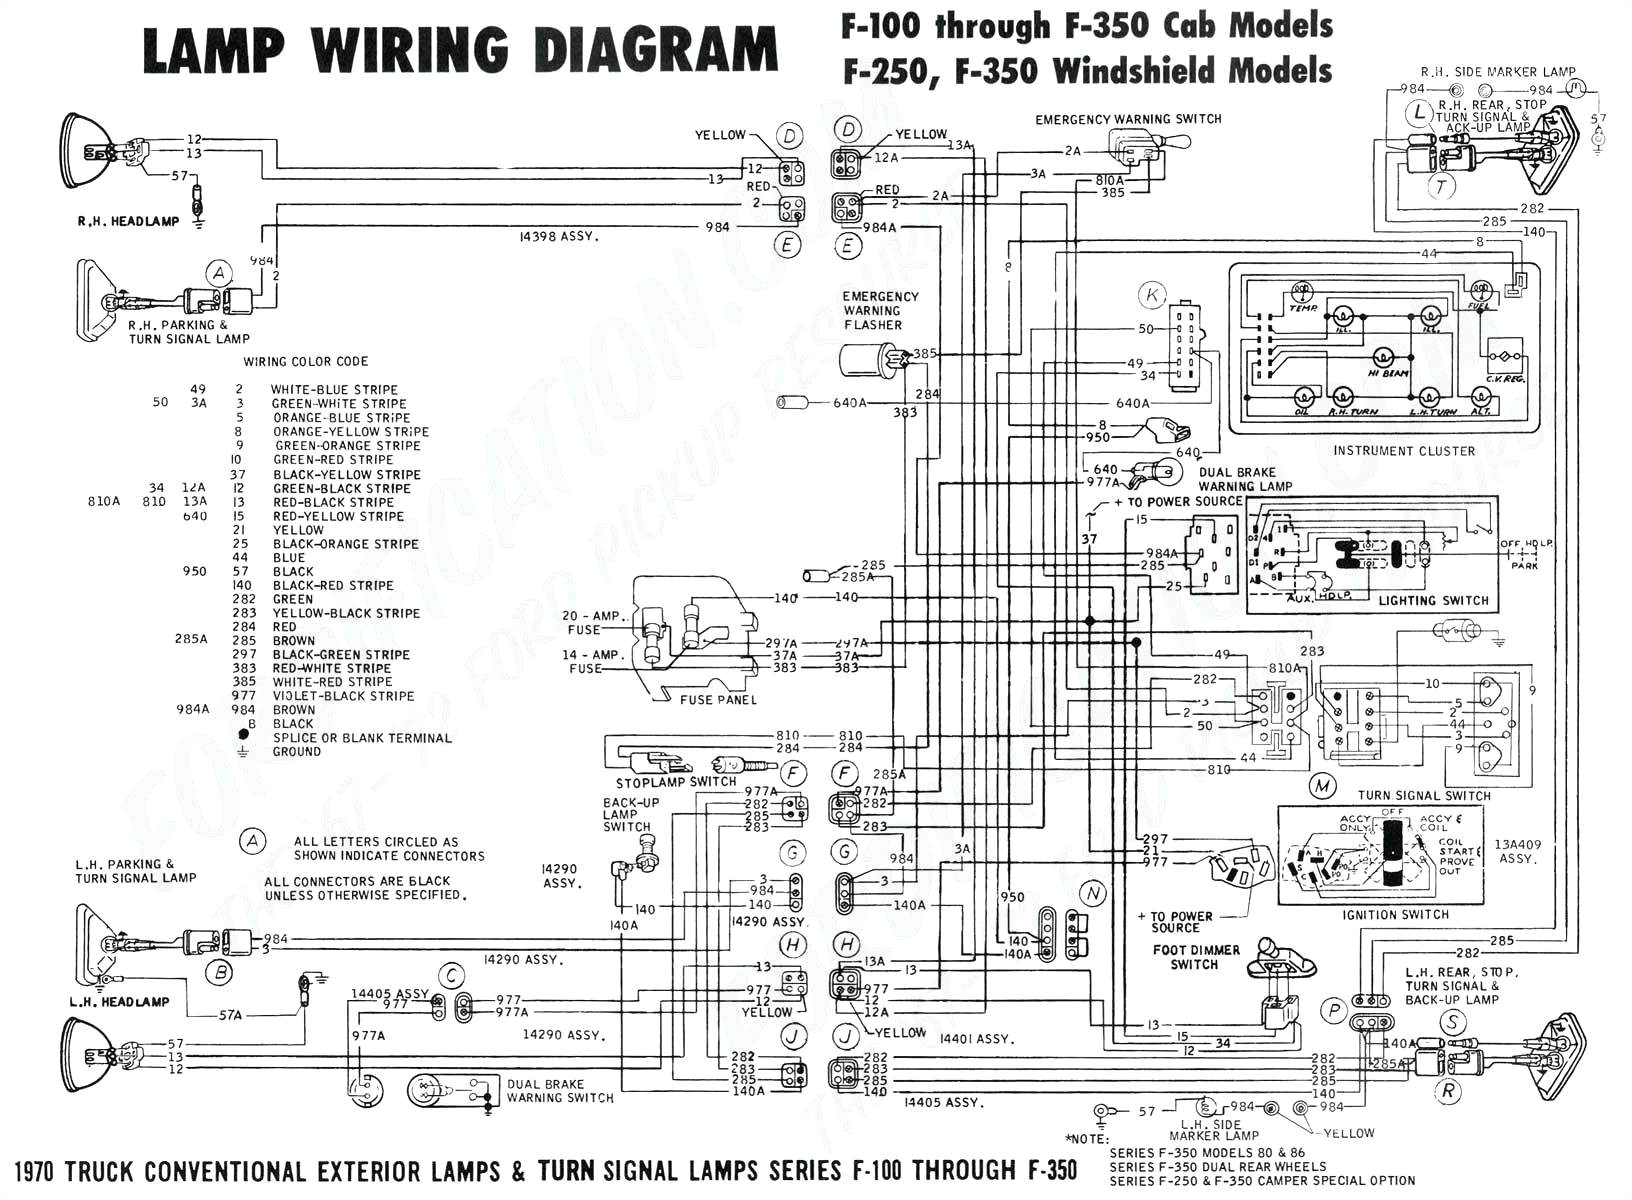 electronic bell circuit diagram tradeoficcom schema wiring diagram musical telephone ringer circuit diagram tradeoficcom wiring digital